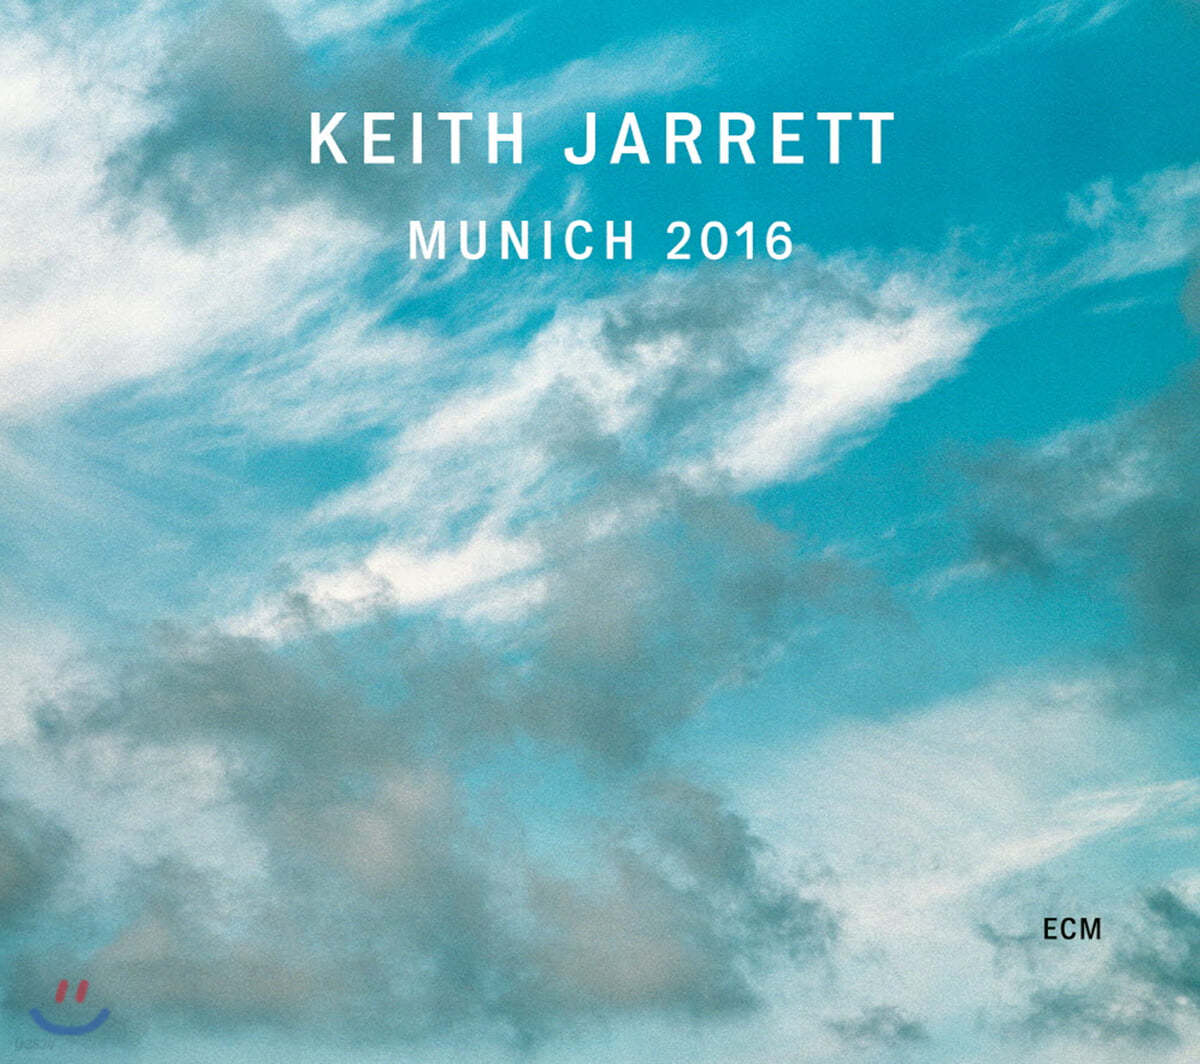 Keith Jarrett - Munich 키스 자렛 2016년 뮌헨 콘서트 [2LP]